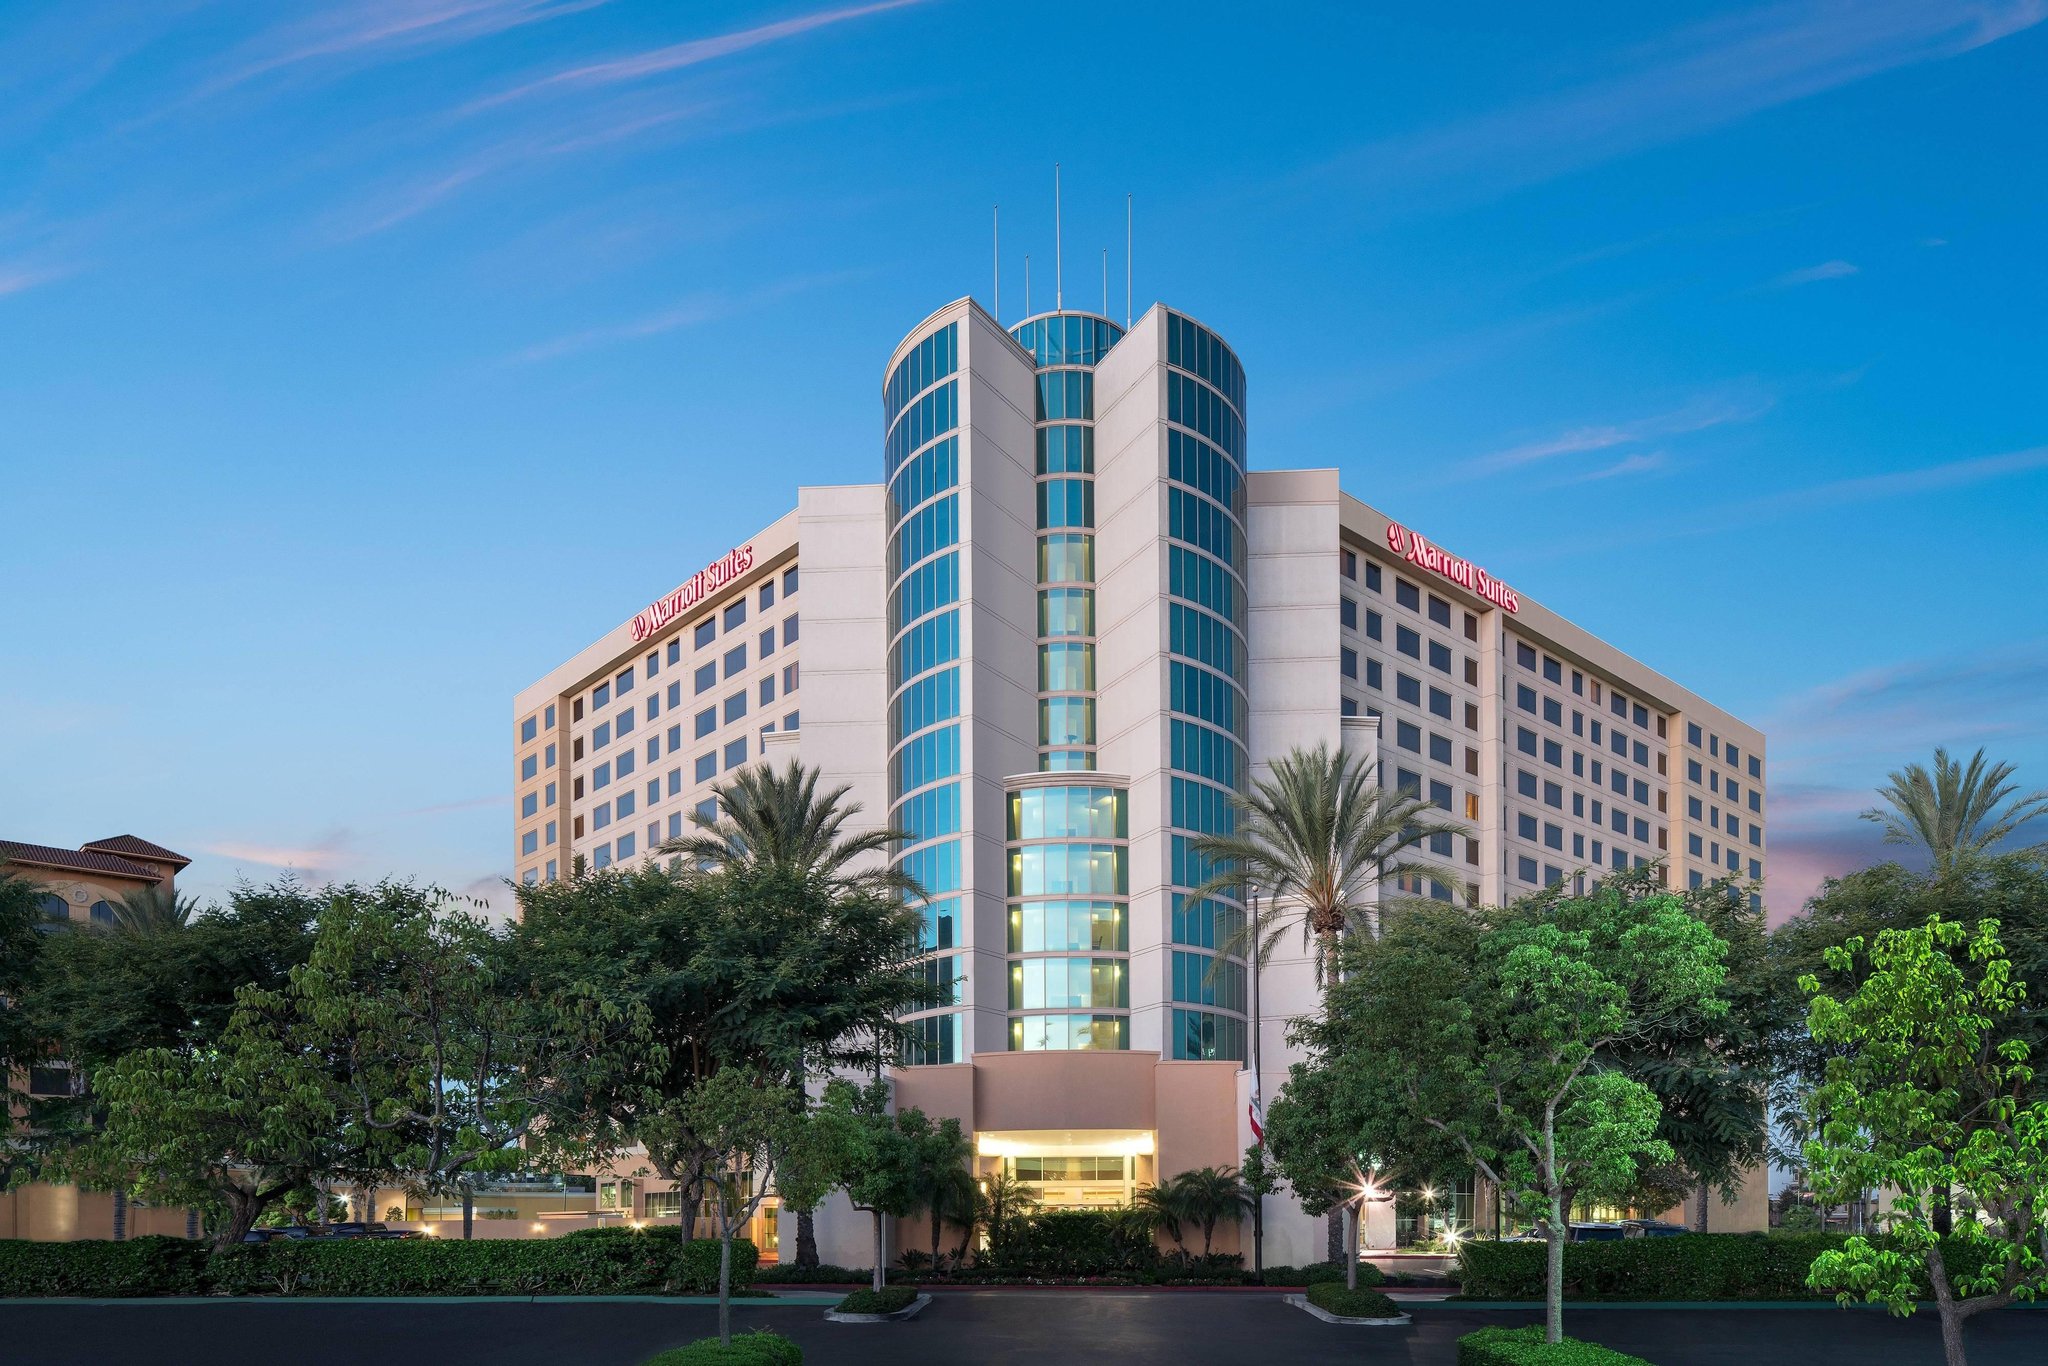 Marriott Suites Anaheim Hotel First Class Garden Grove Ca Hotels